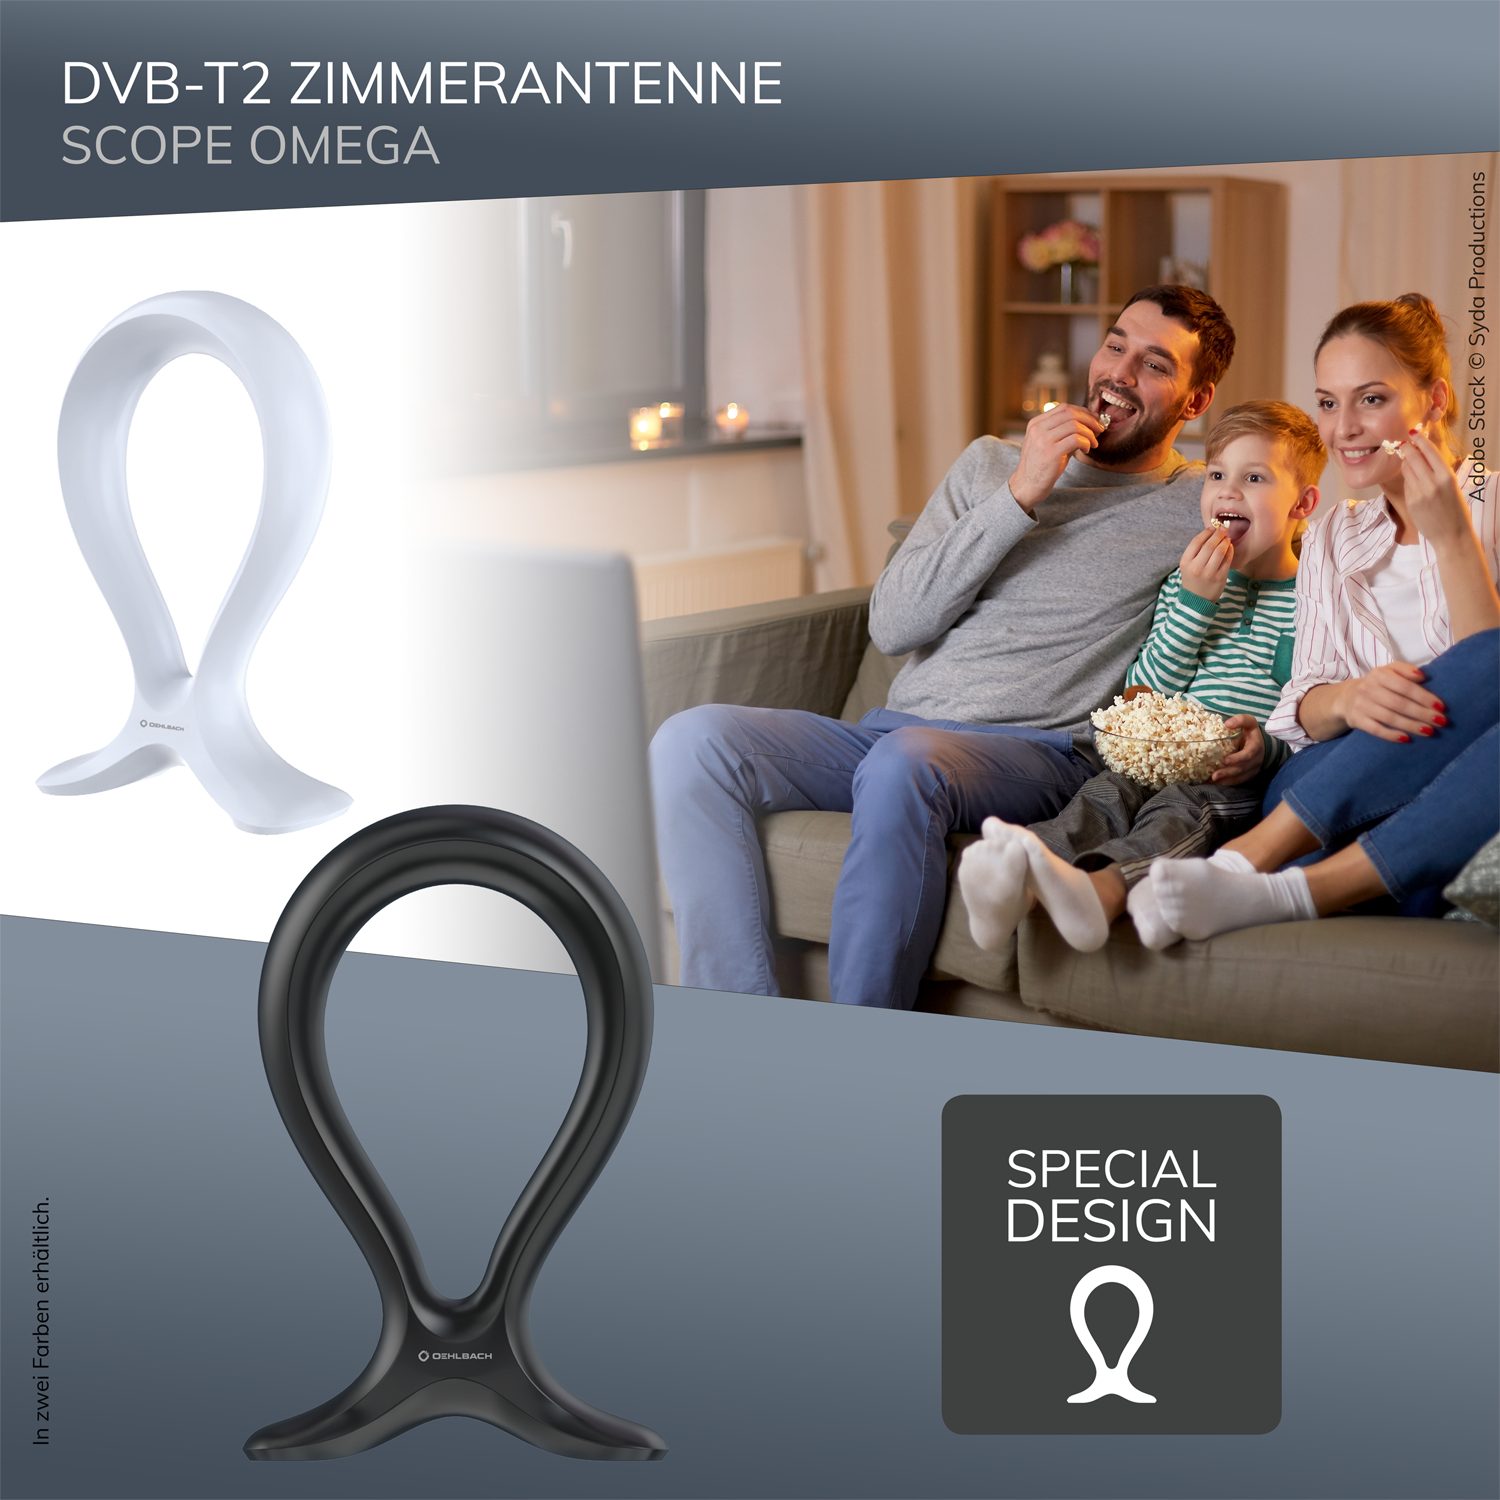 Zimmerantenne Oehlbach für DVB-T2 Innenantenne Omega (DVB-T2) Weiß Scope